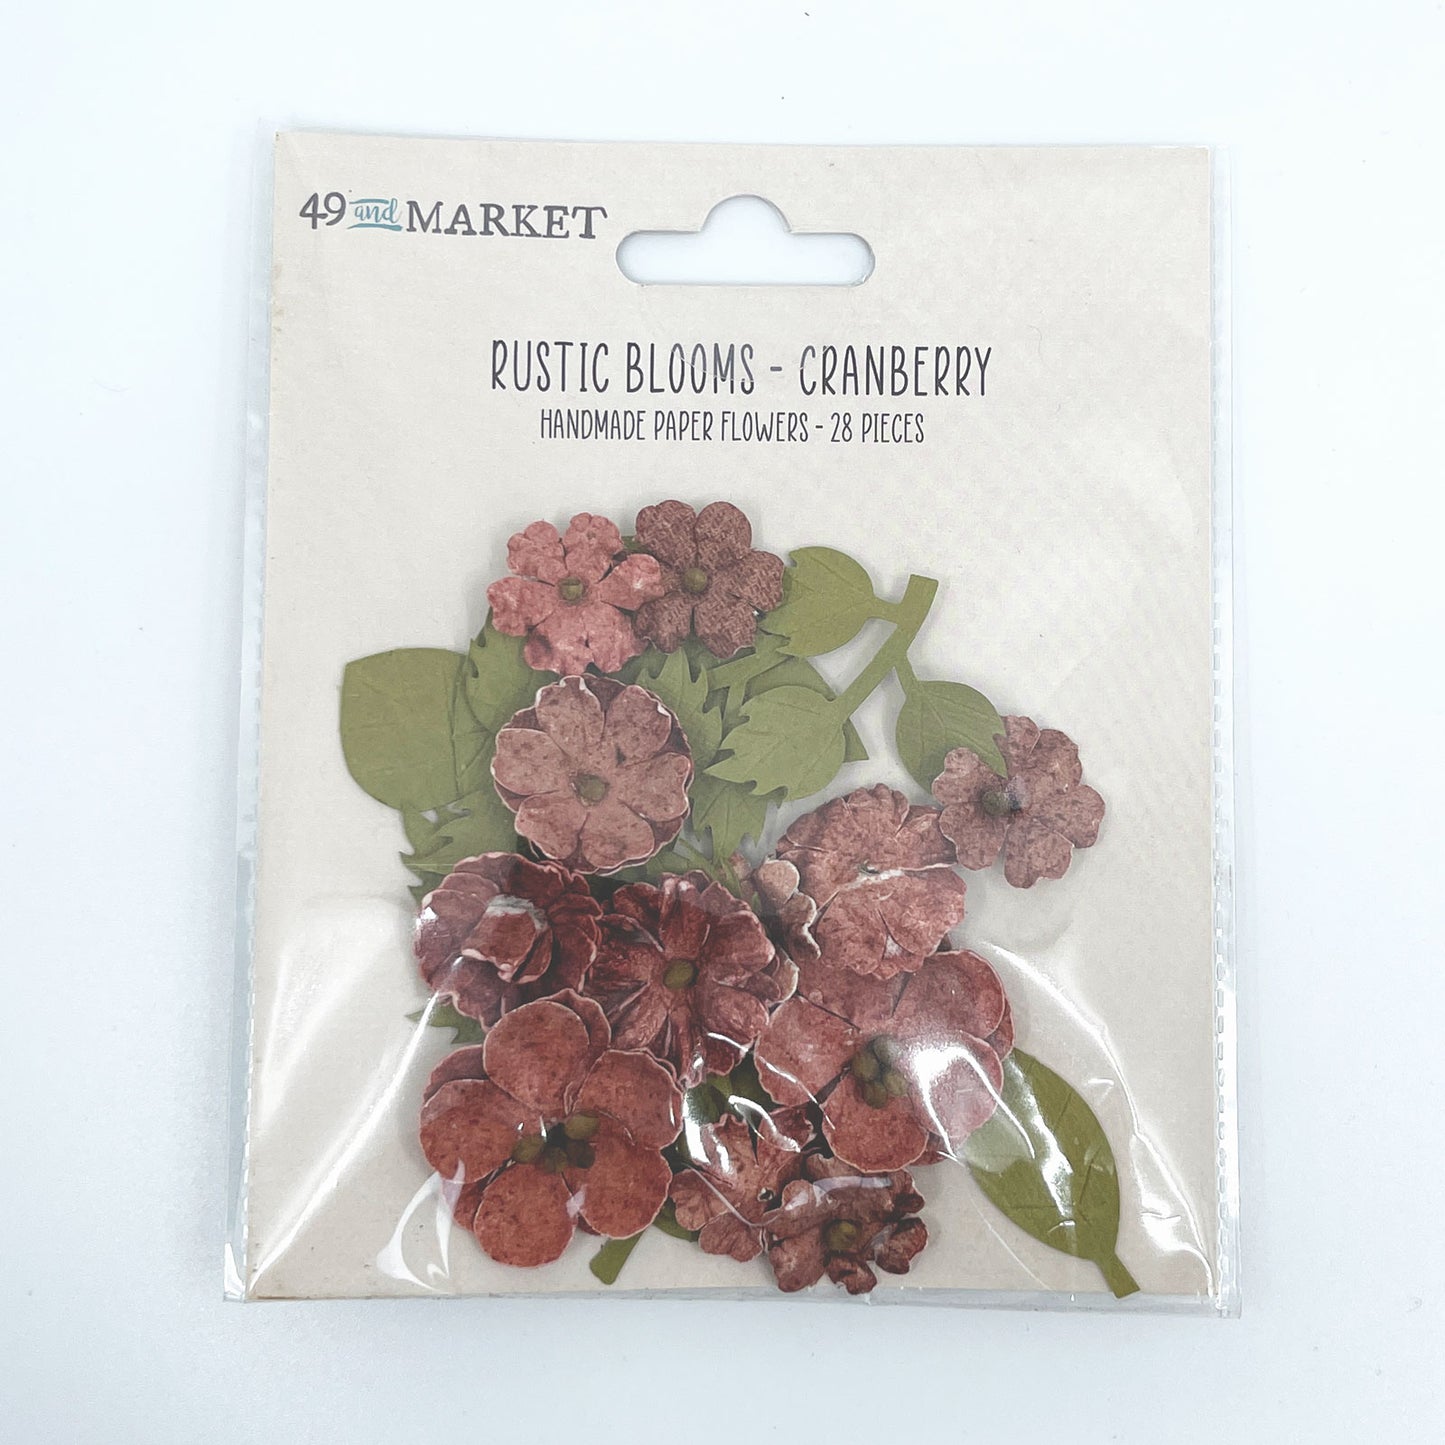 49 & Market - Rustic Blooms - Cranberry